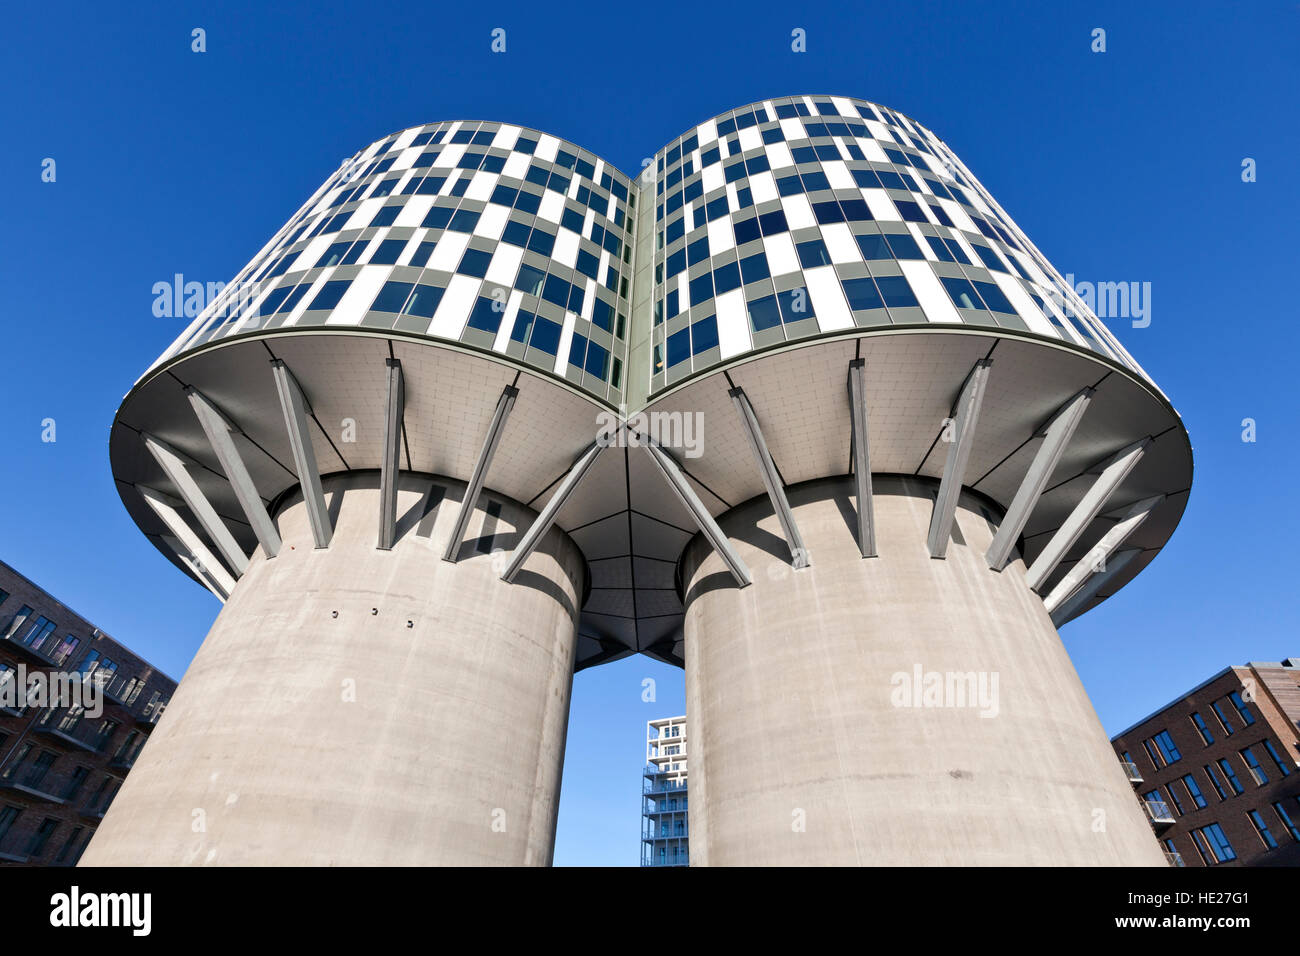 Zwei ehemalige Aalborg Portland-Zement-Silos in Kopenhagen Nordhavn konvertiert nun moderne Bürohäuser, die Portland-Türme Stockfoto